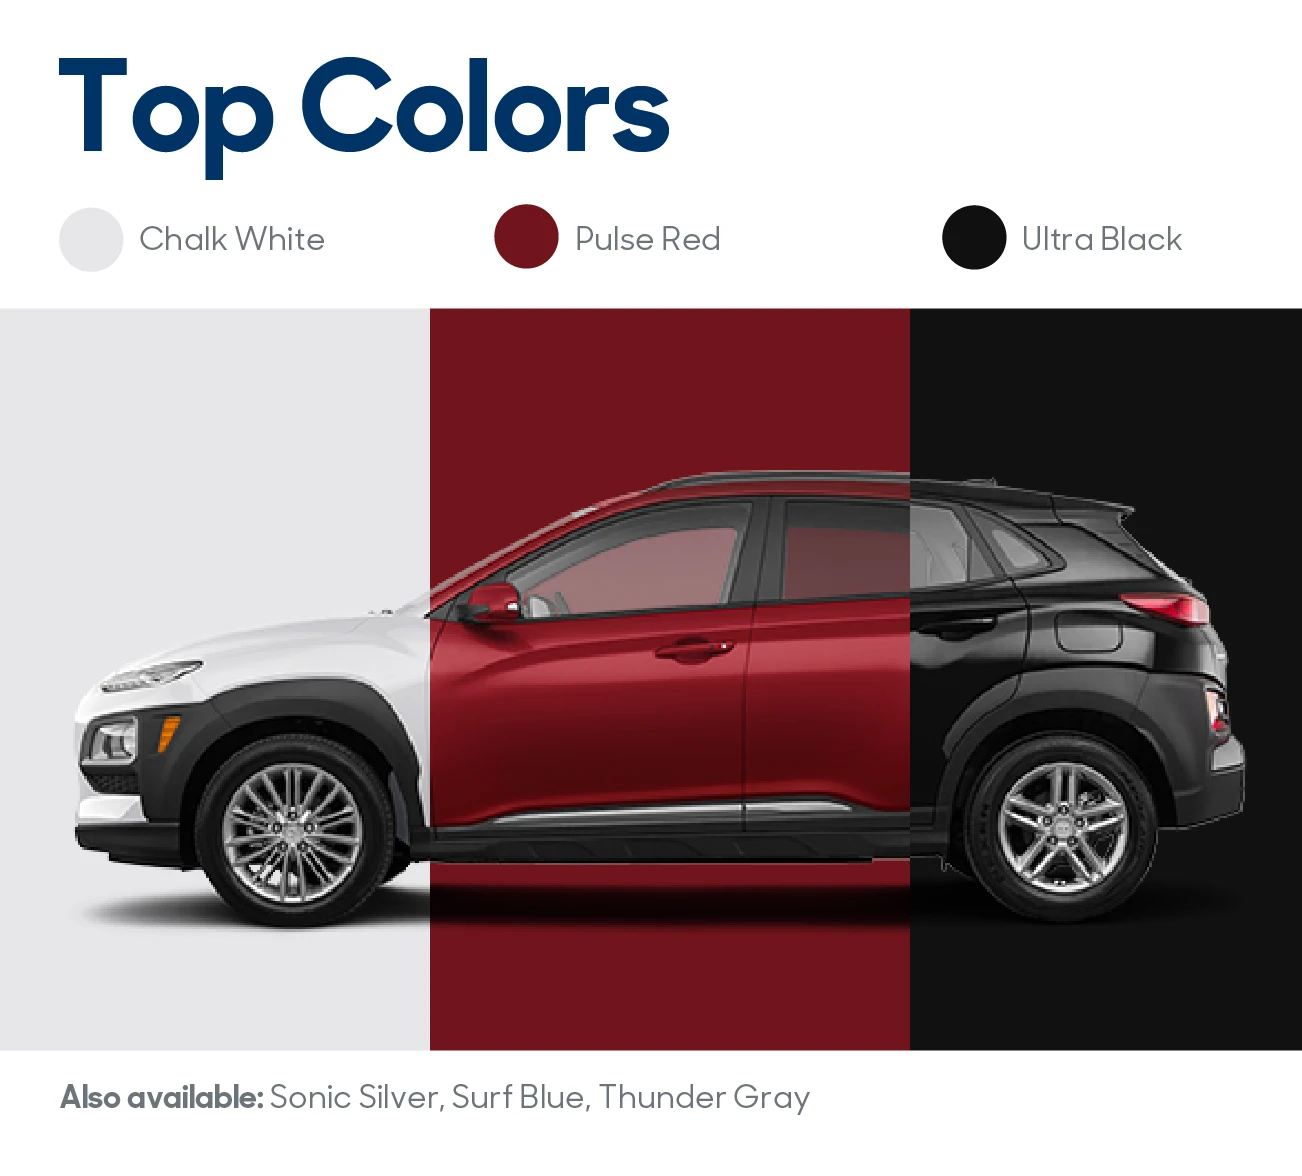 2021 Hyundai Kona Review: Top Colors | CarMax